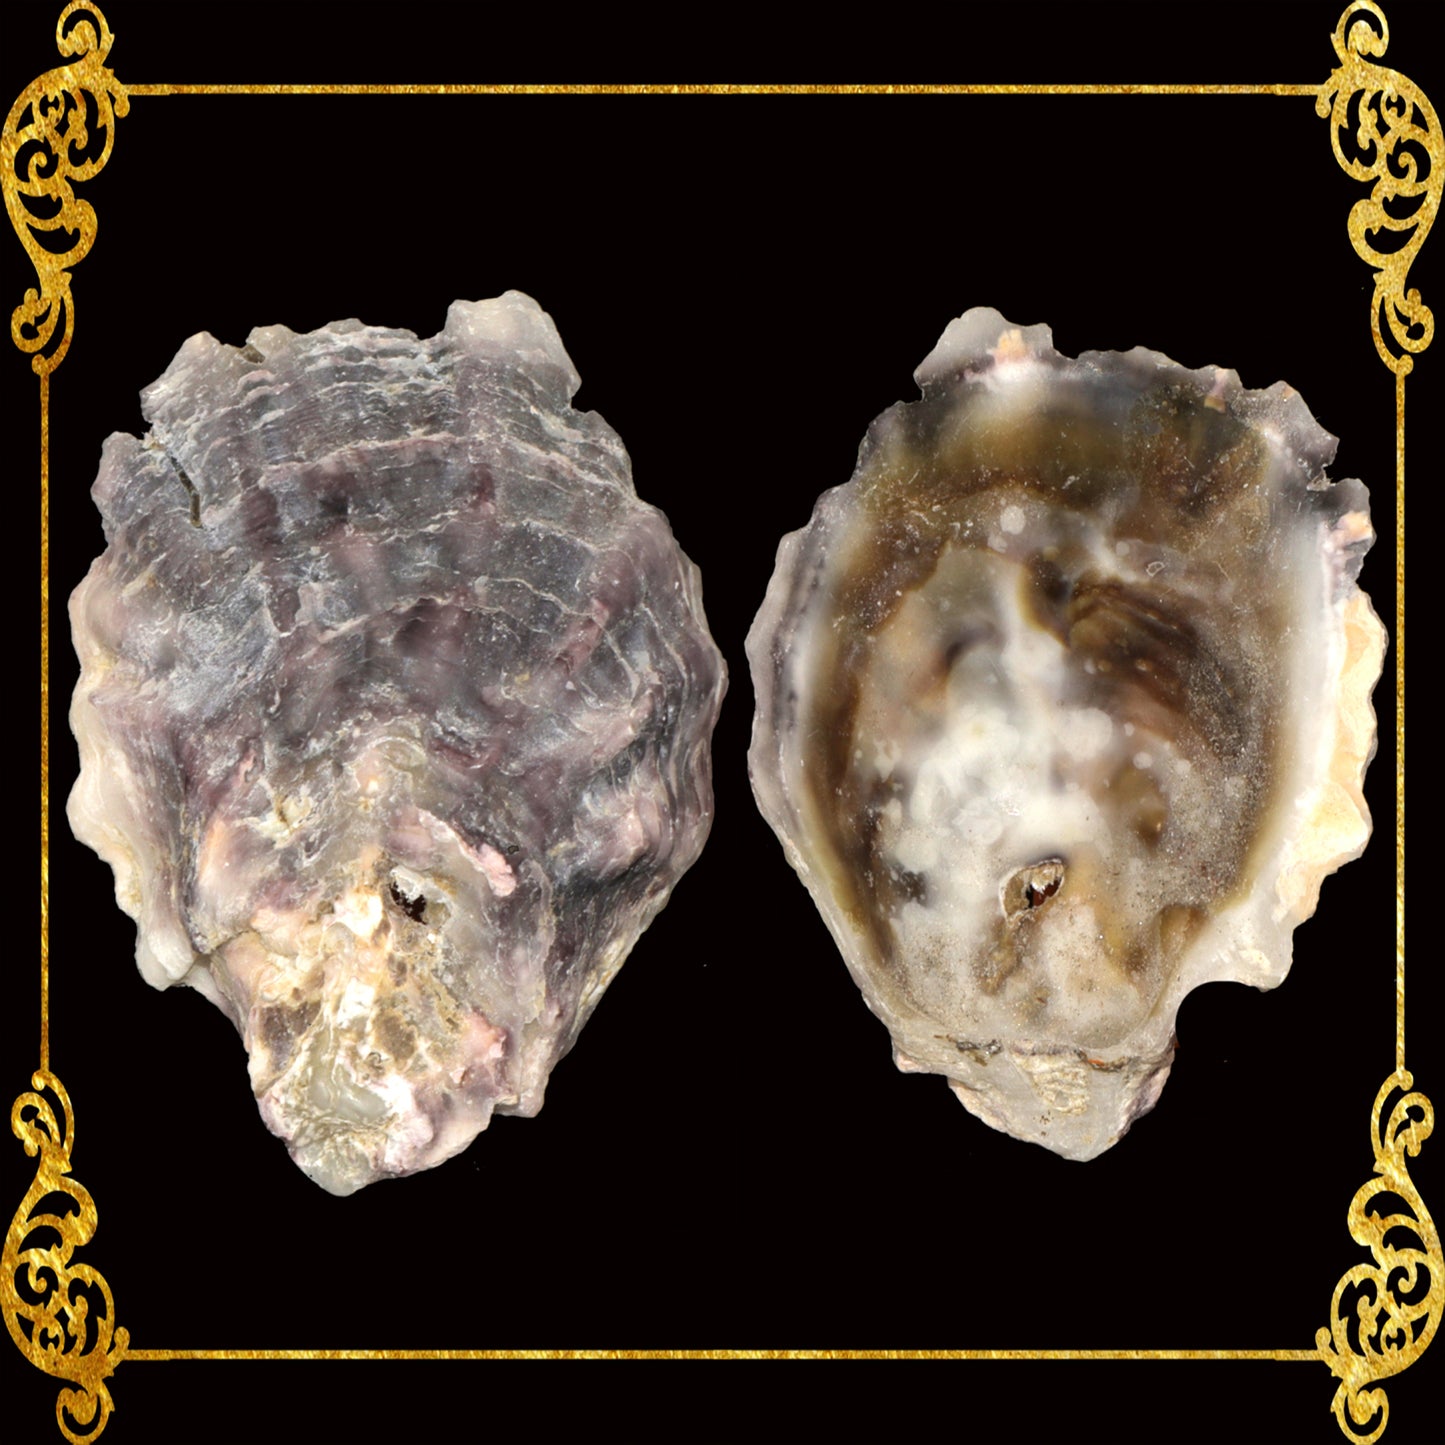 1 Kilo | Talaba | Philippine Cupped Oyster | Seashells | Sea shells